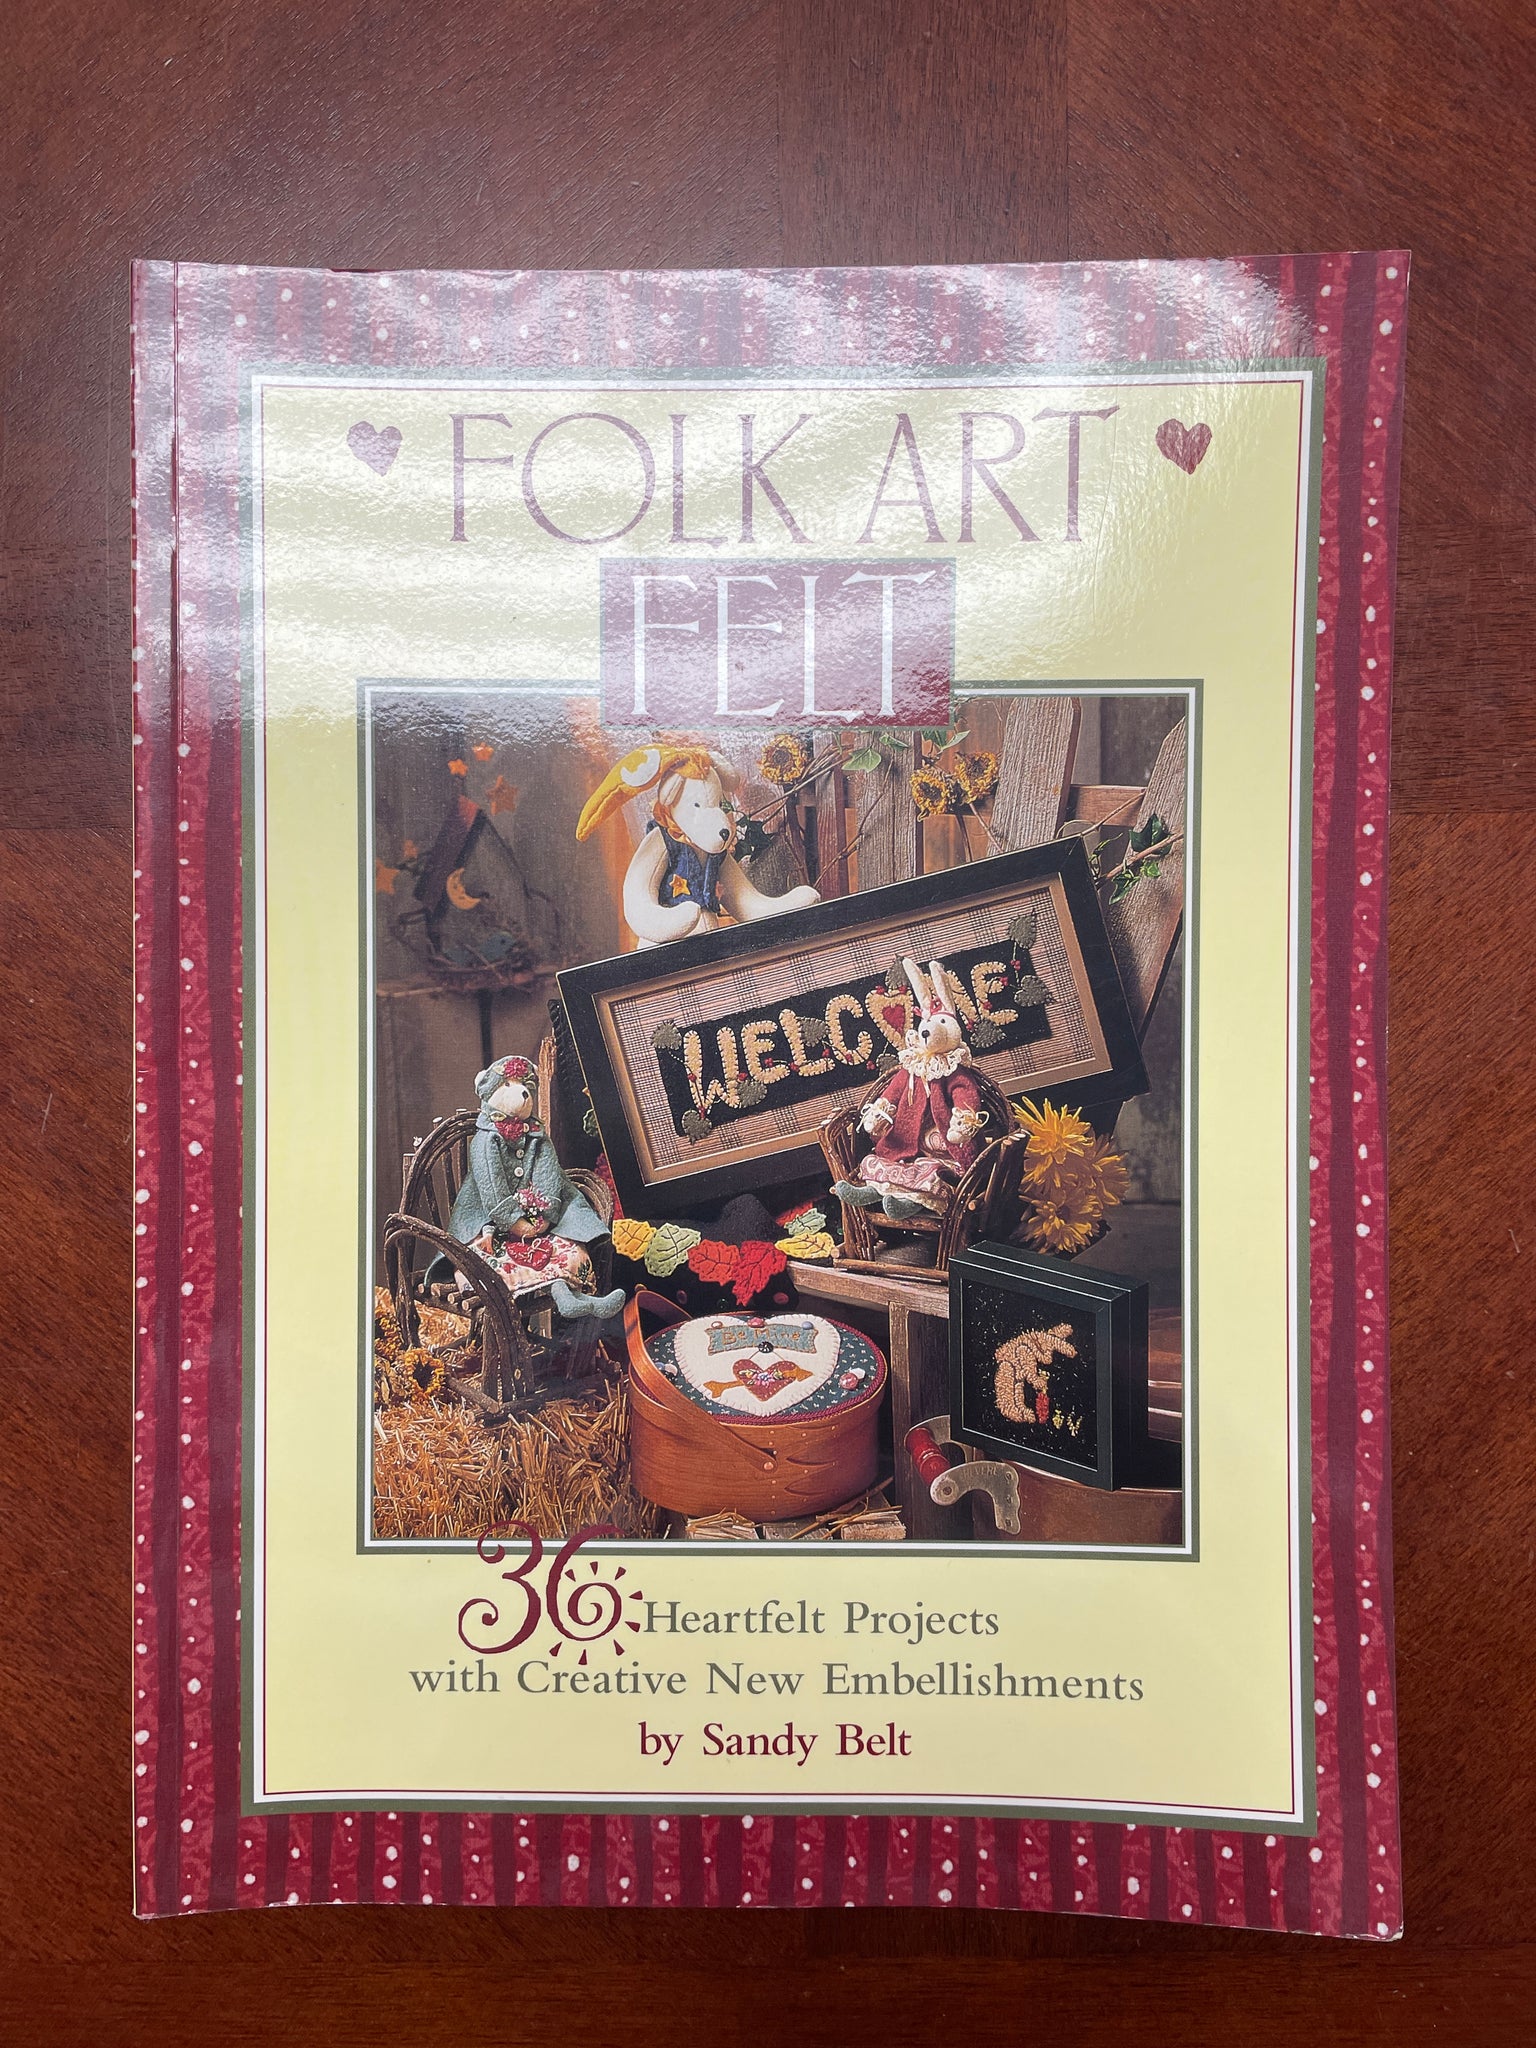 1997 Applique and Quilting Book - "Folk Art Felt"